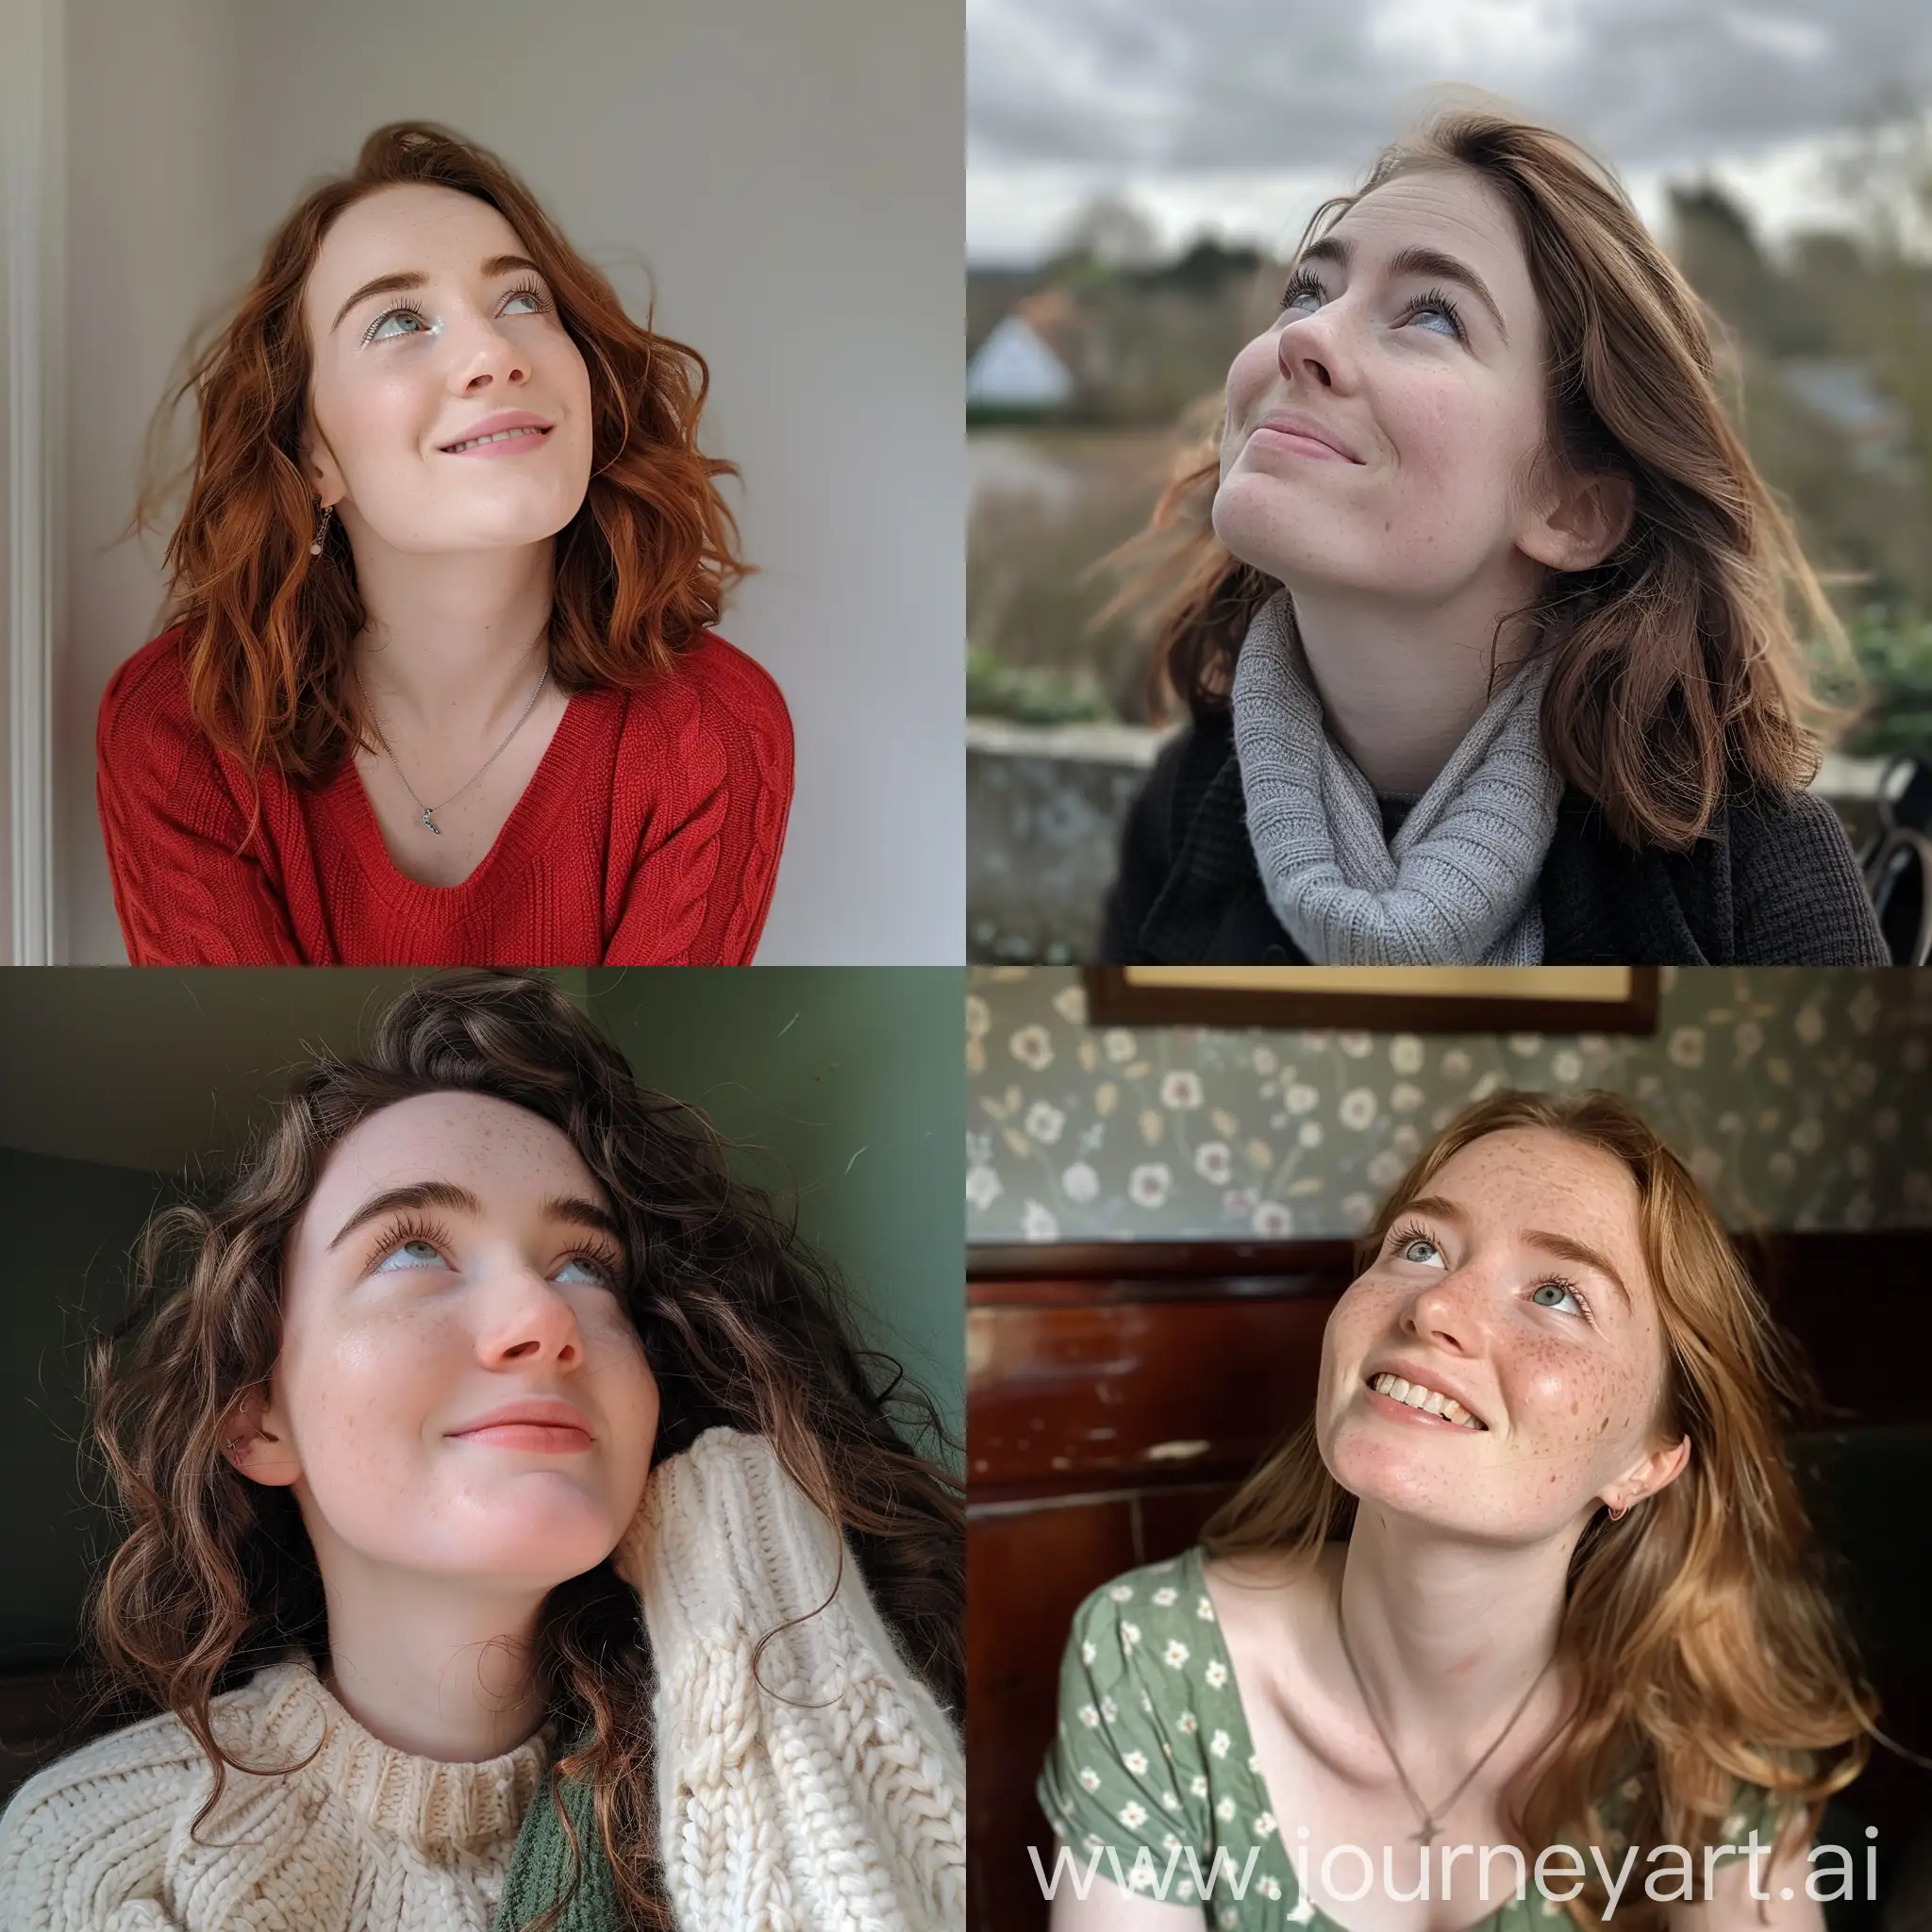 Cheerful-23YearOld-Irish-Woman-Gazing-Up-with-Joy